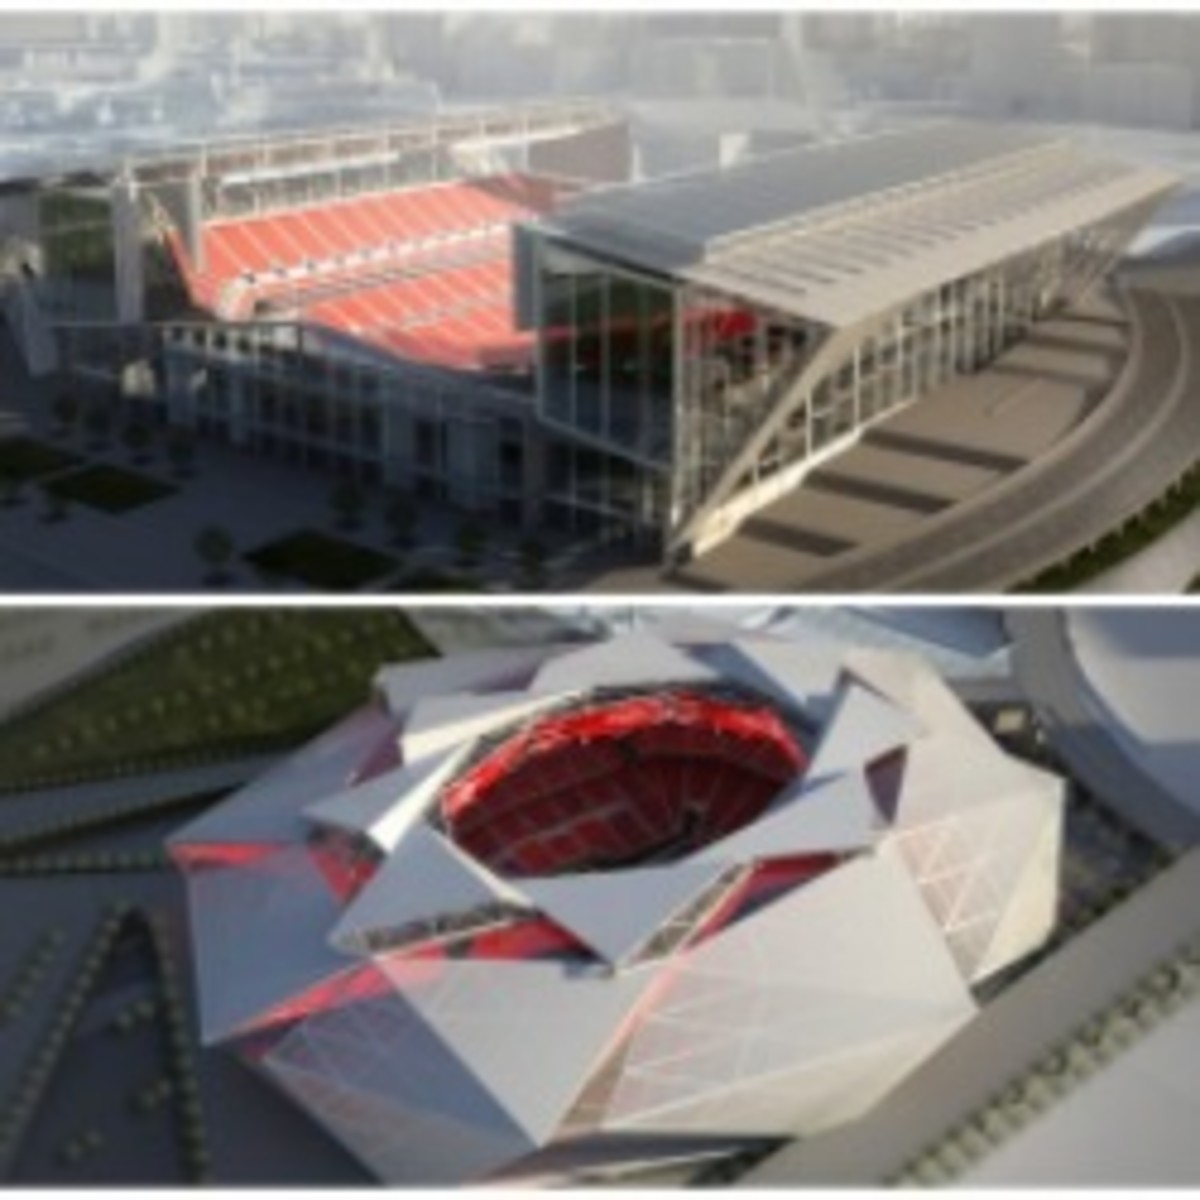 The new Atlanta Falcons stadium could look liks this. (Photo courtesy of Georgia World Congress Center)